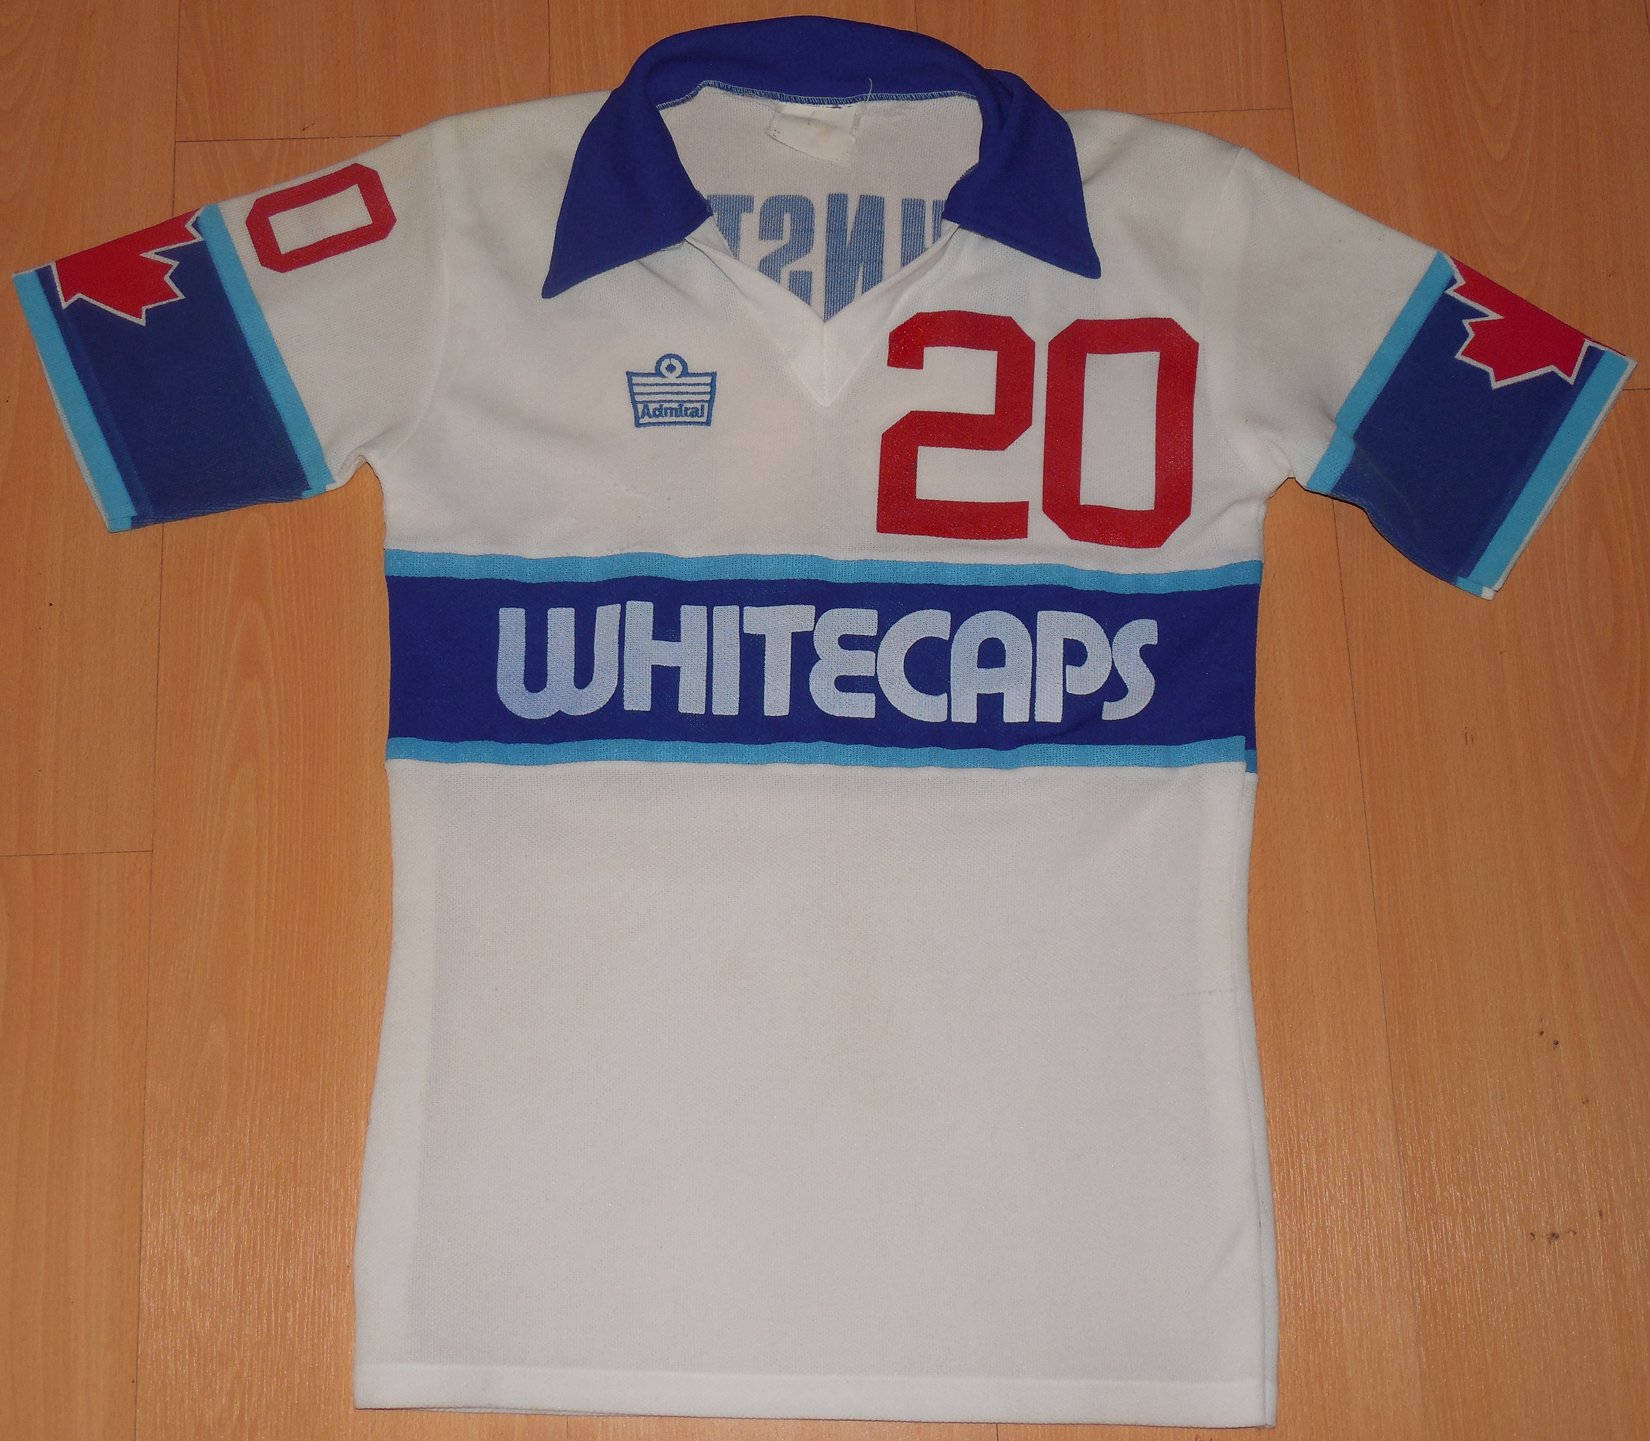 Whitecaps 80 Home Jersey Willie Johnston (1).JPG